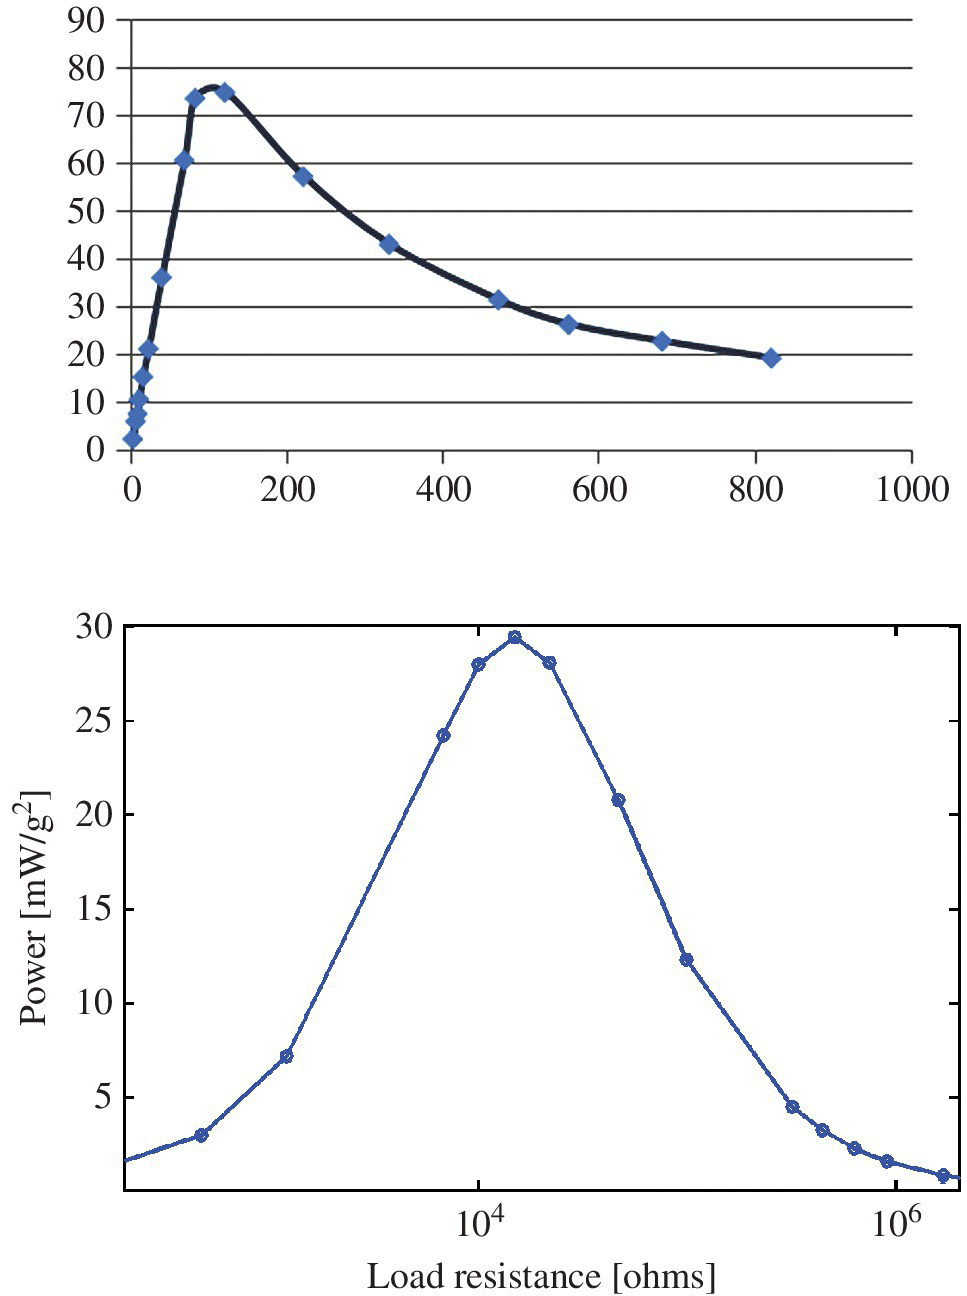 2 Line graphs illustrating optimal load resistance for solar harvesting (top) and piezoelectric harvesting (bottom).